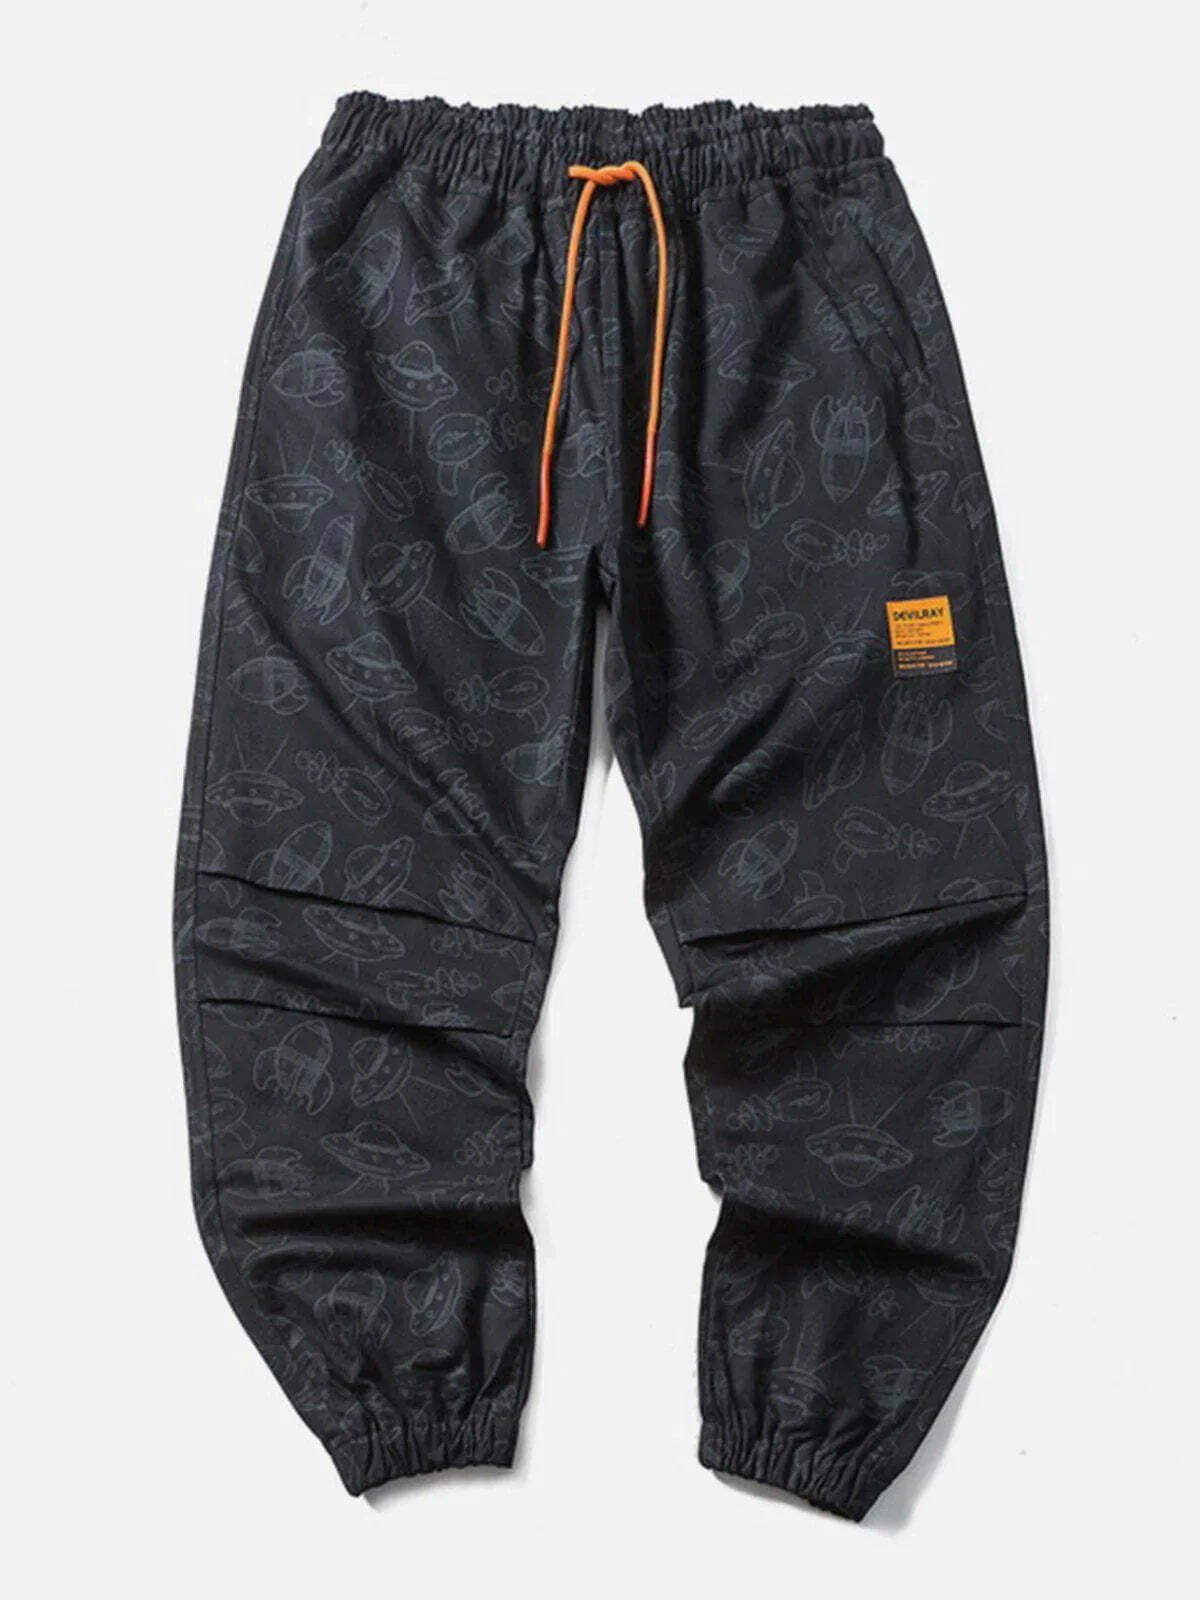 retro ufo pattern pants edgy & vibrant streetwear 8851